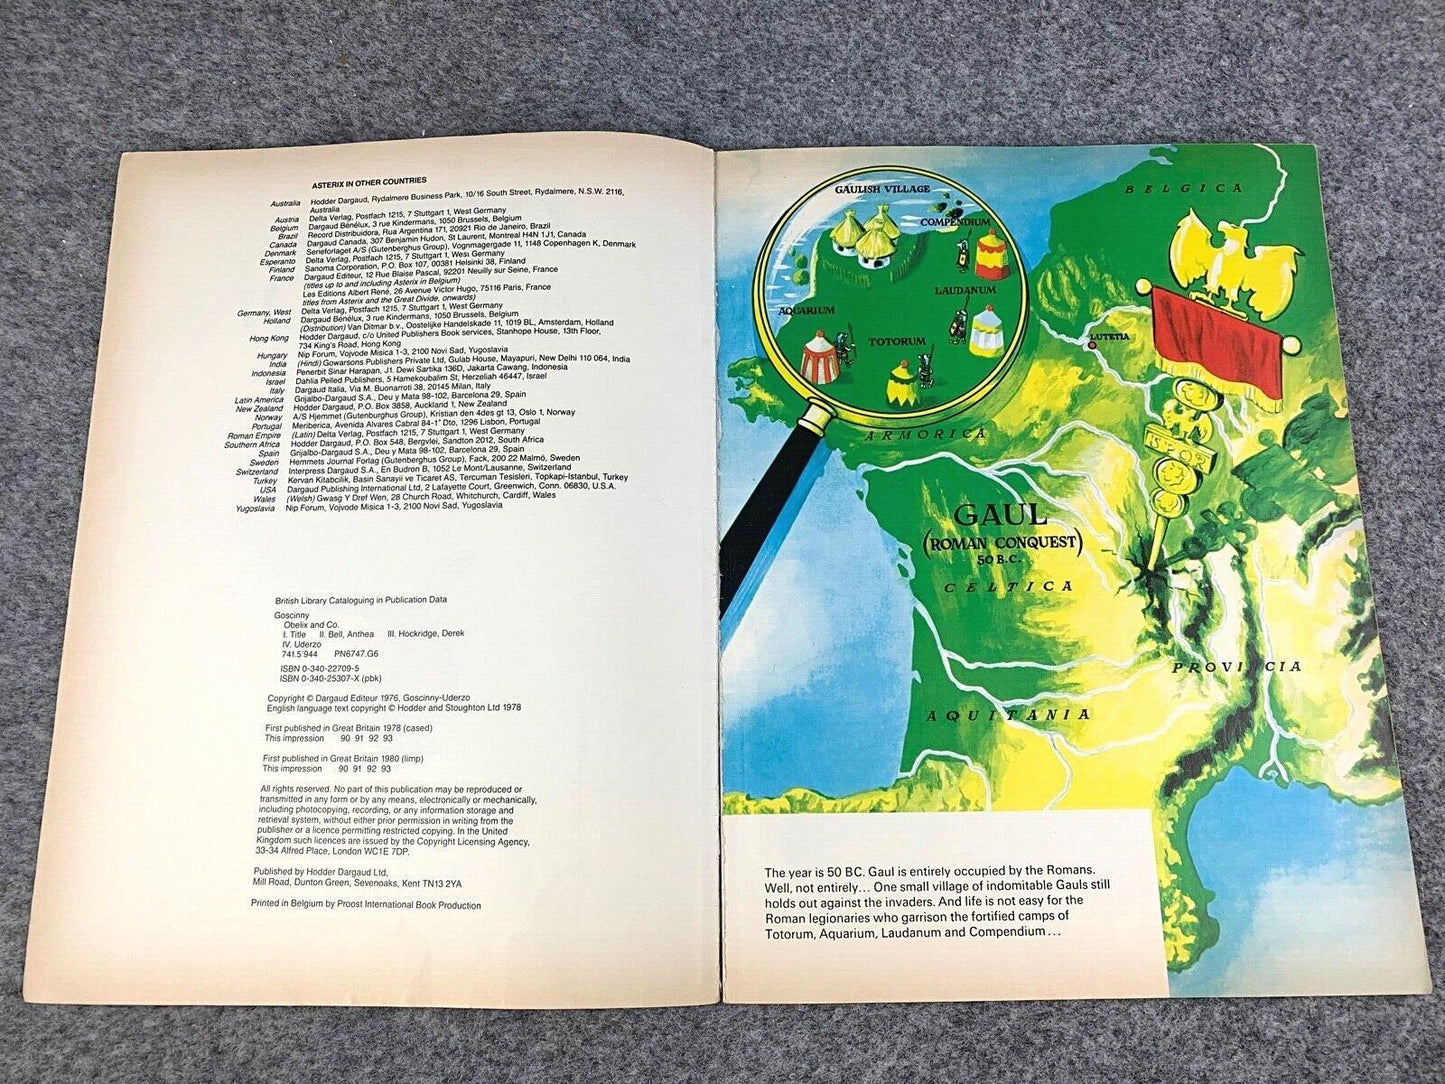 Obelix & Co - Asterix 1970/80s Hodder/Dargaud UK Edition Paperback Book Uderzo